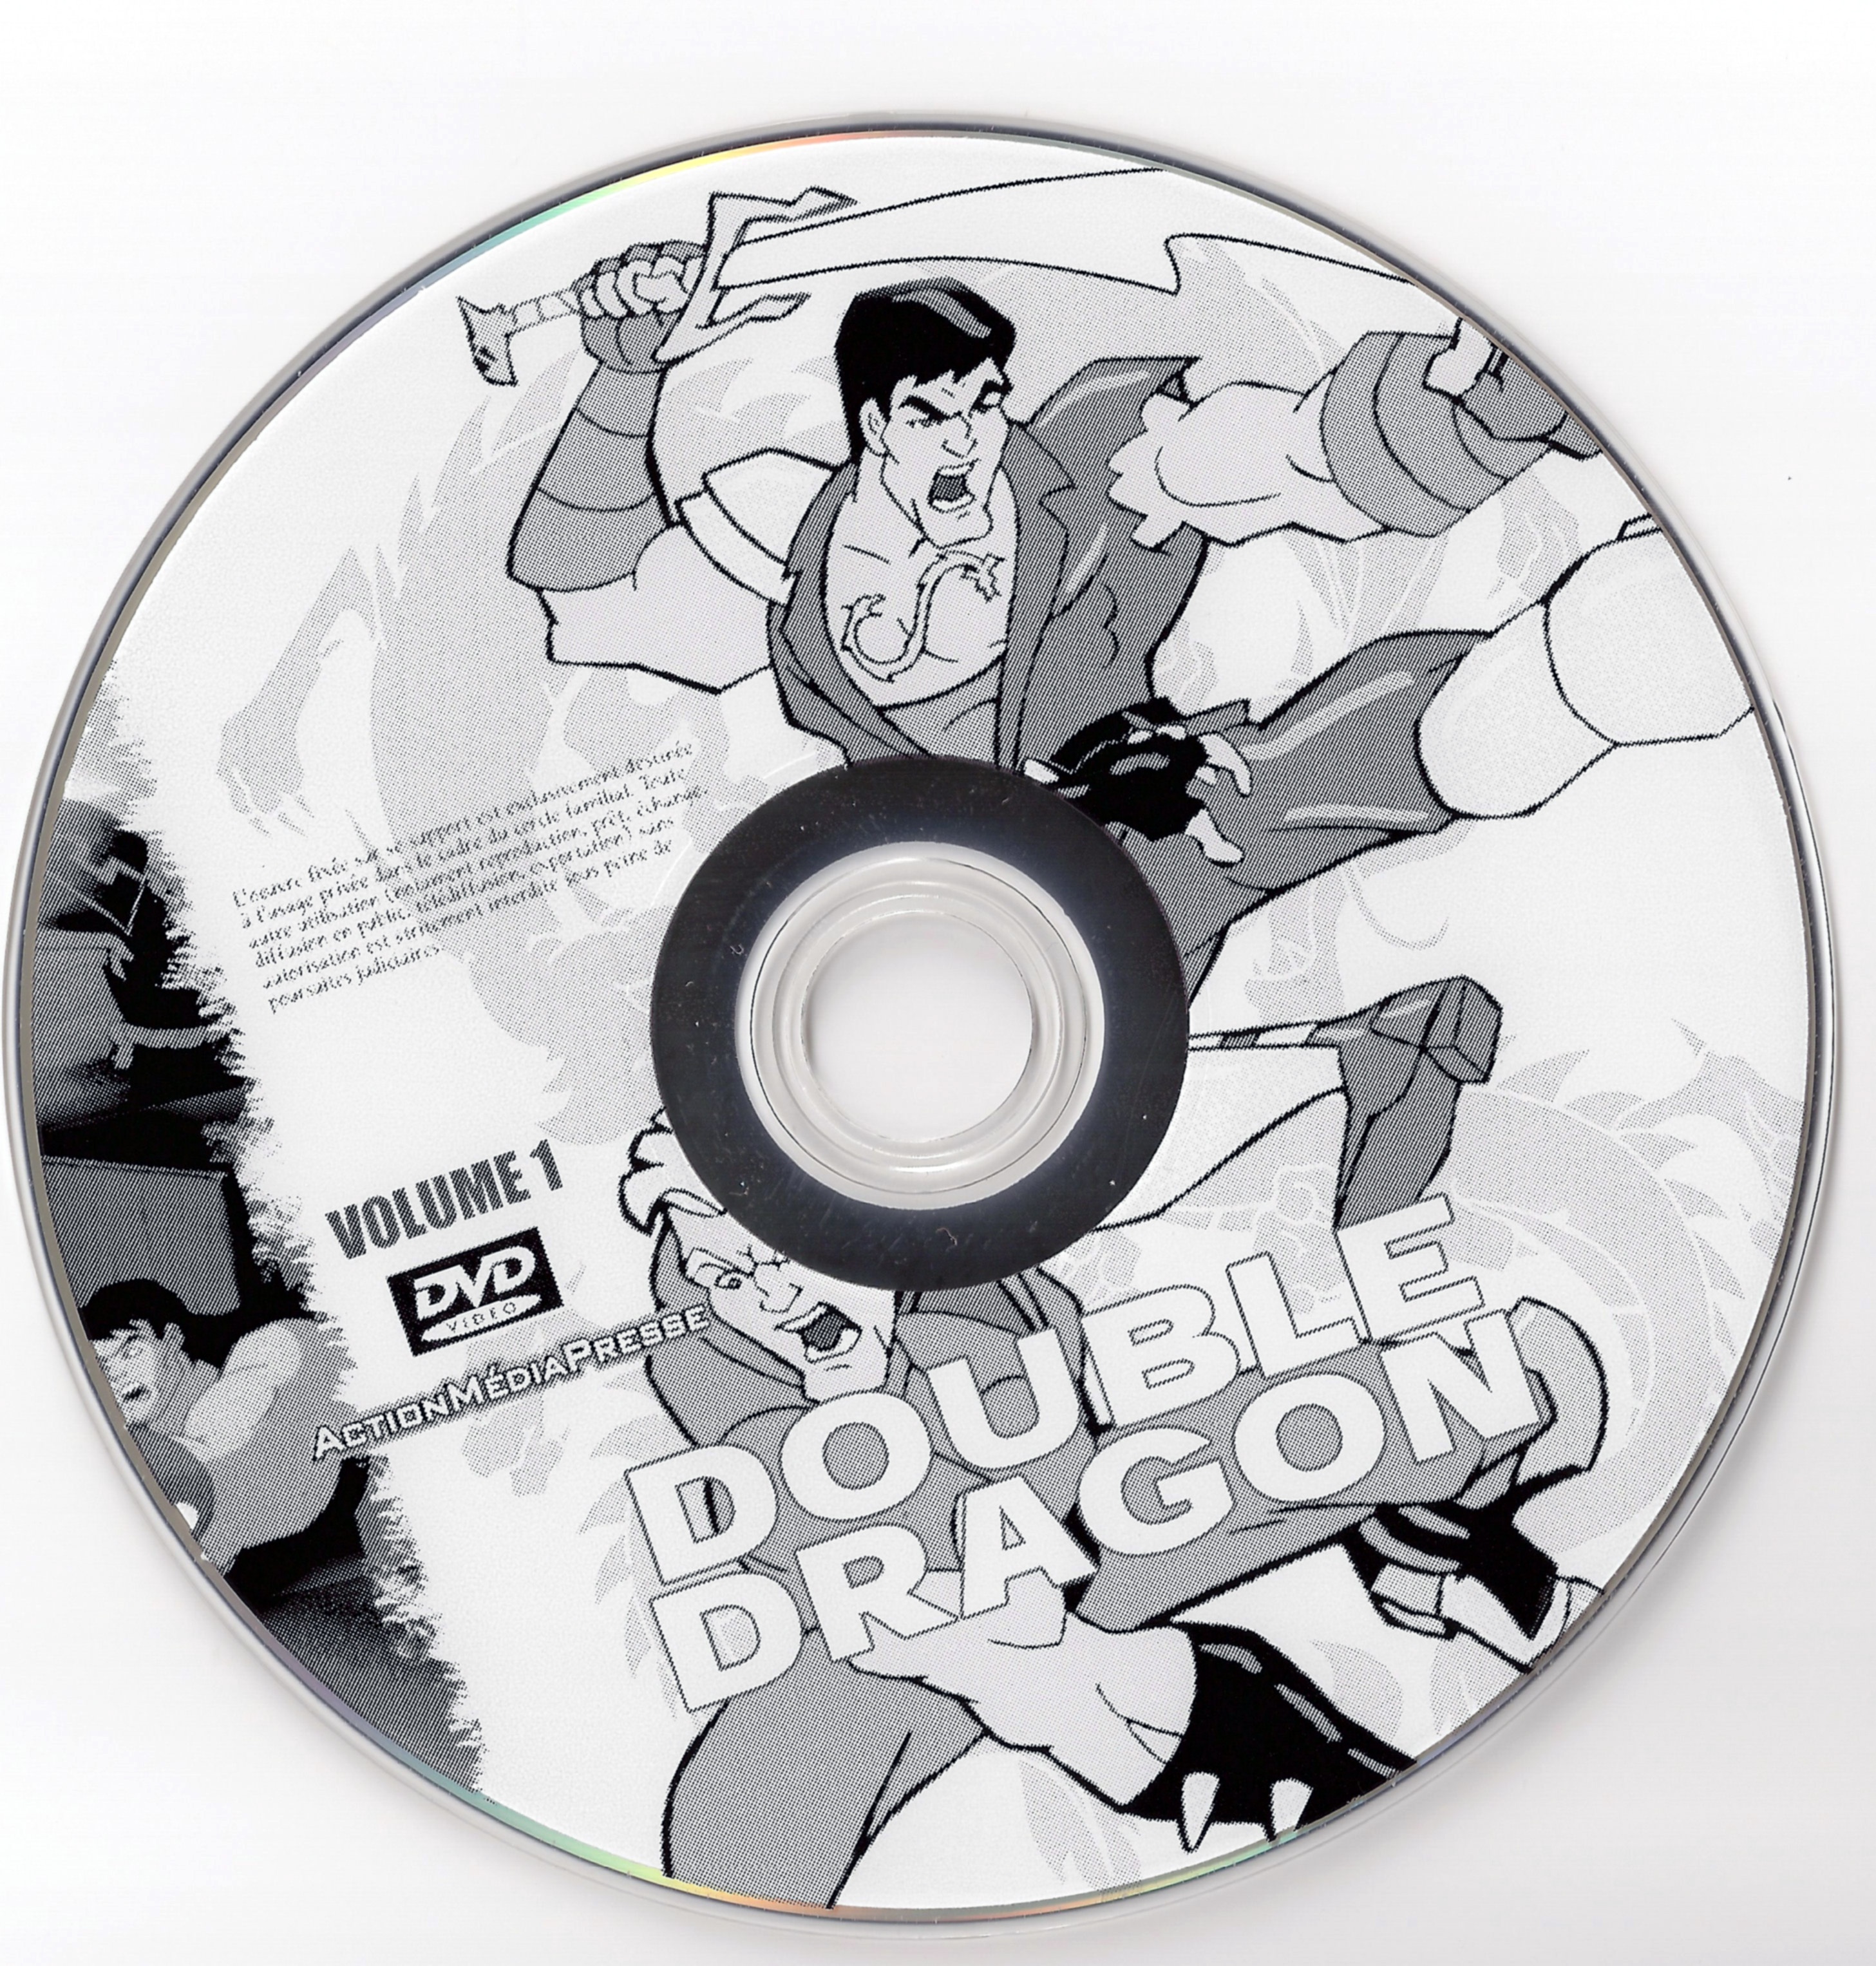 Double dragon vol 1